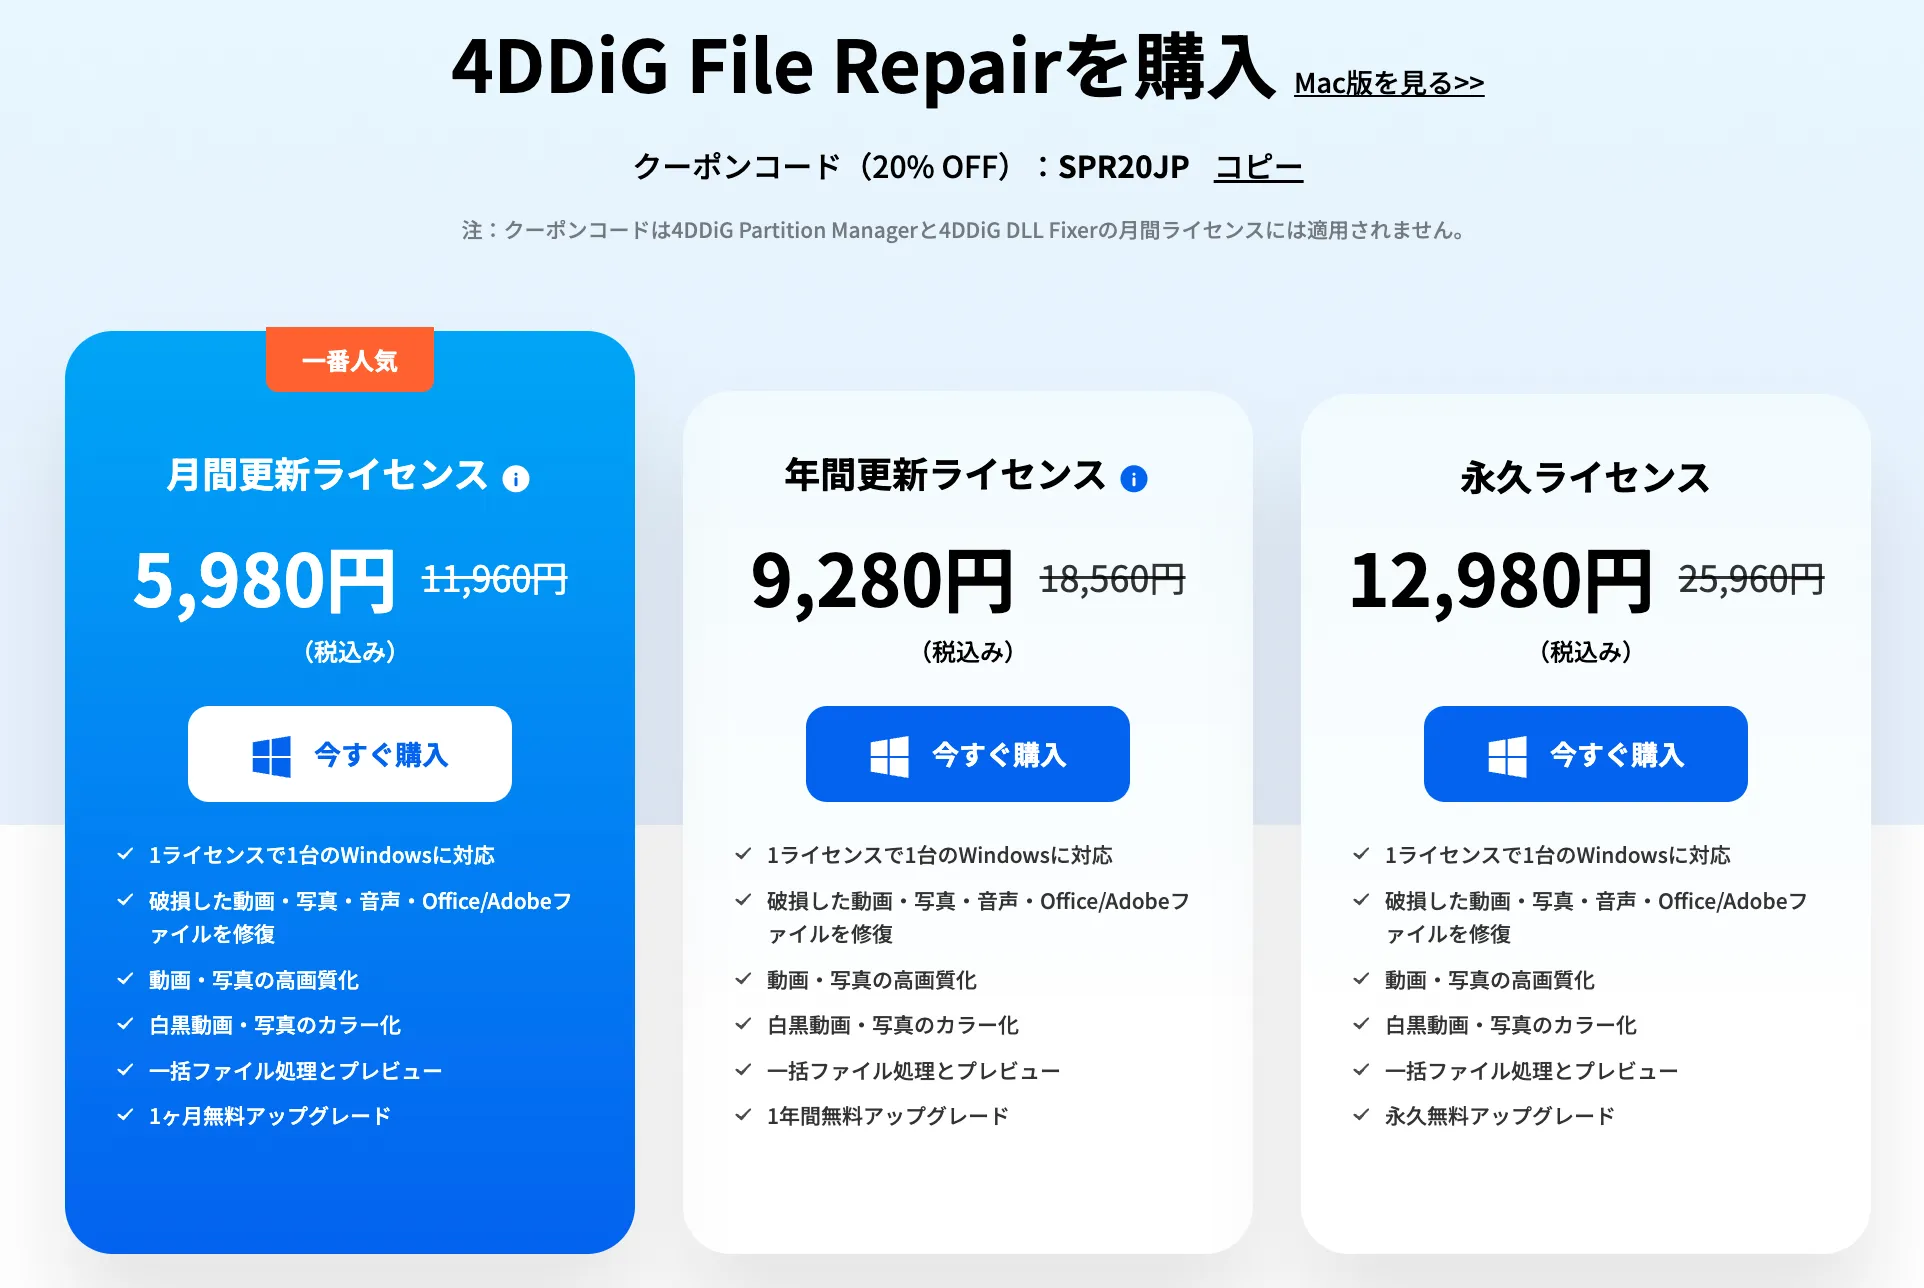 4DDiG File Repairのセール、クーポン